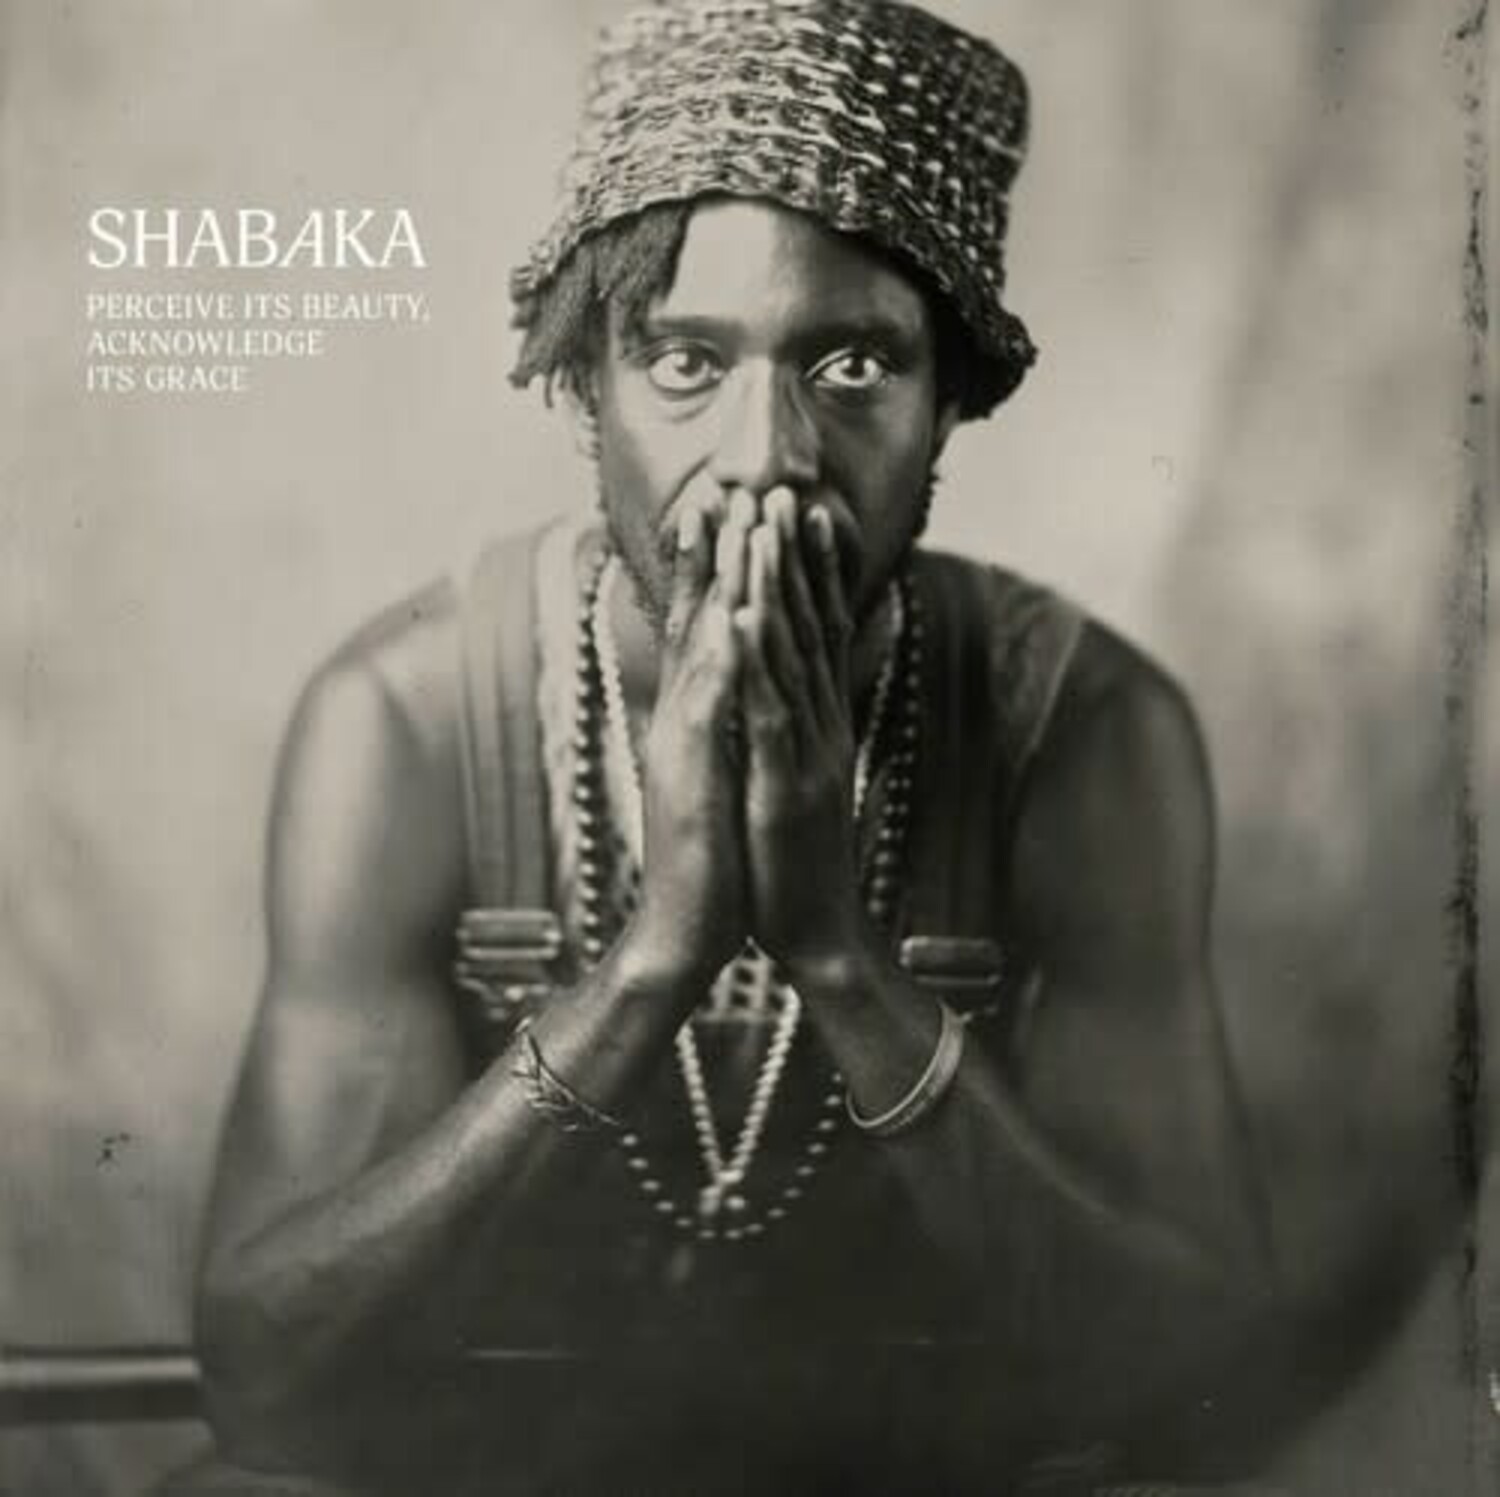 shabaka-perceive-its-beauty-acknowledge-its-grace